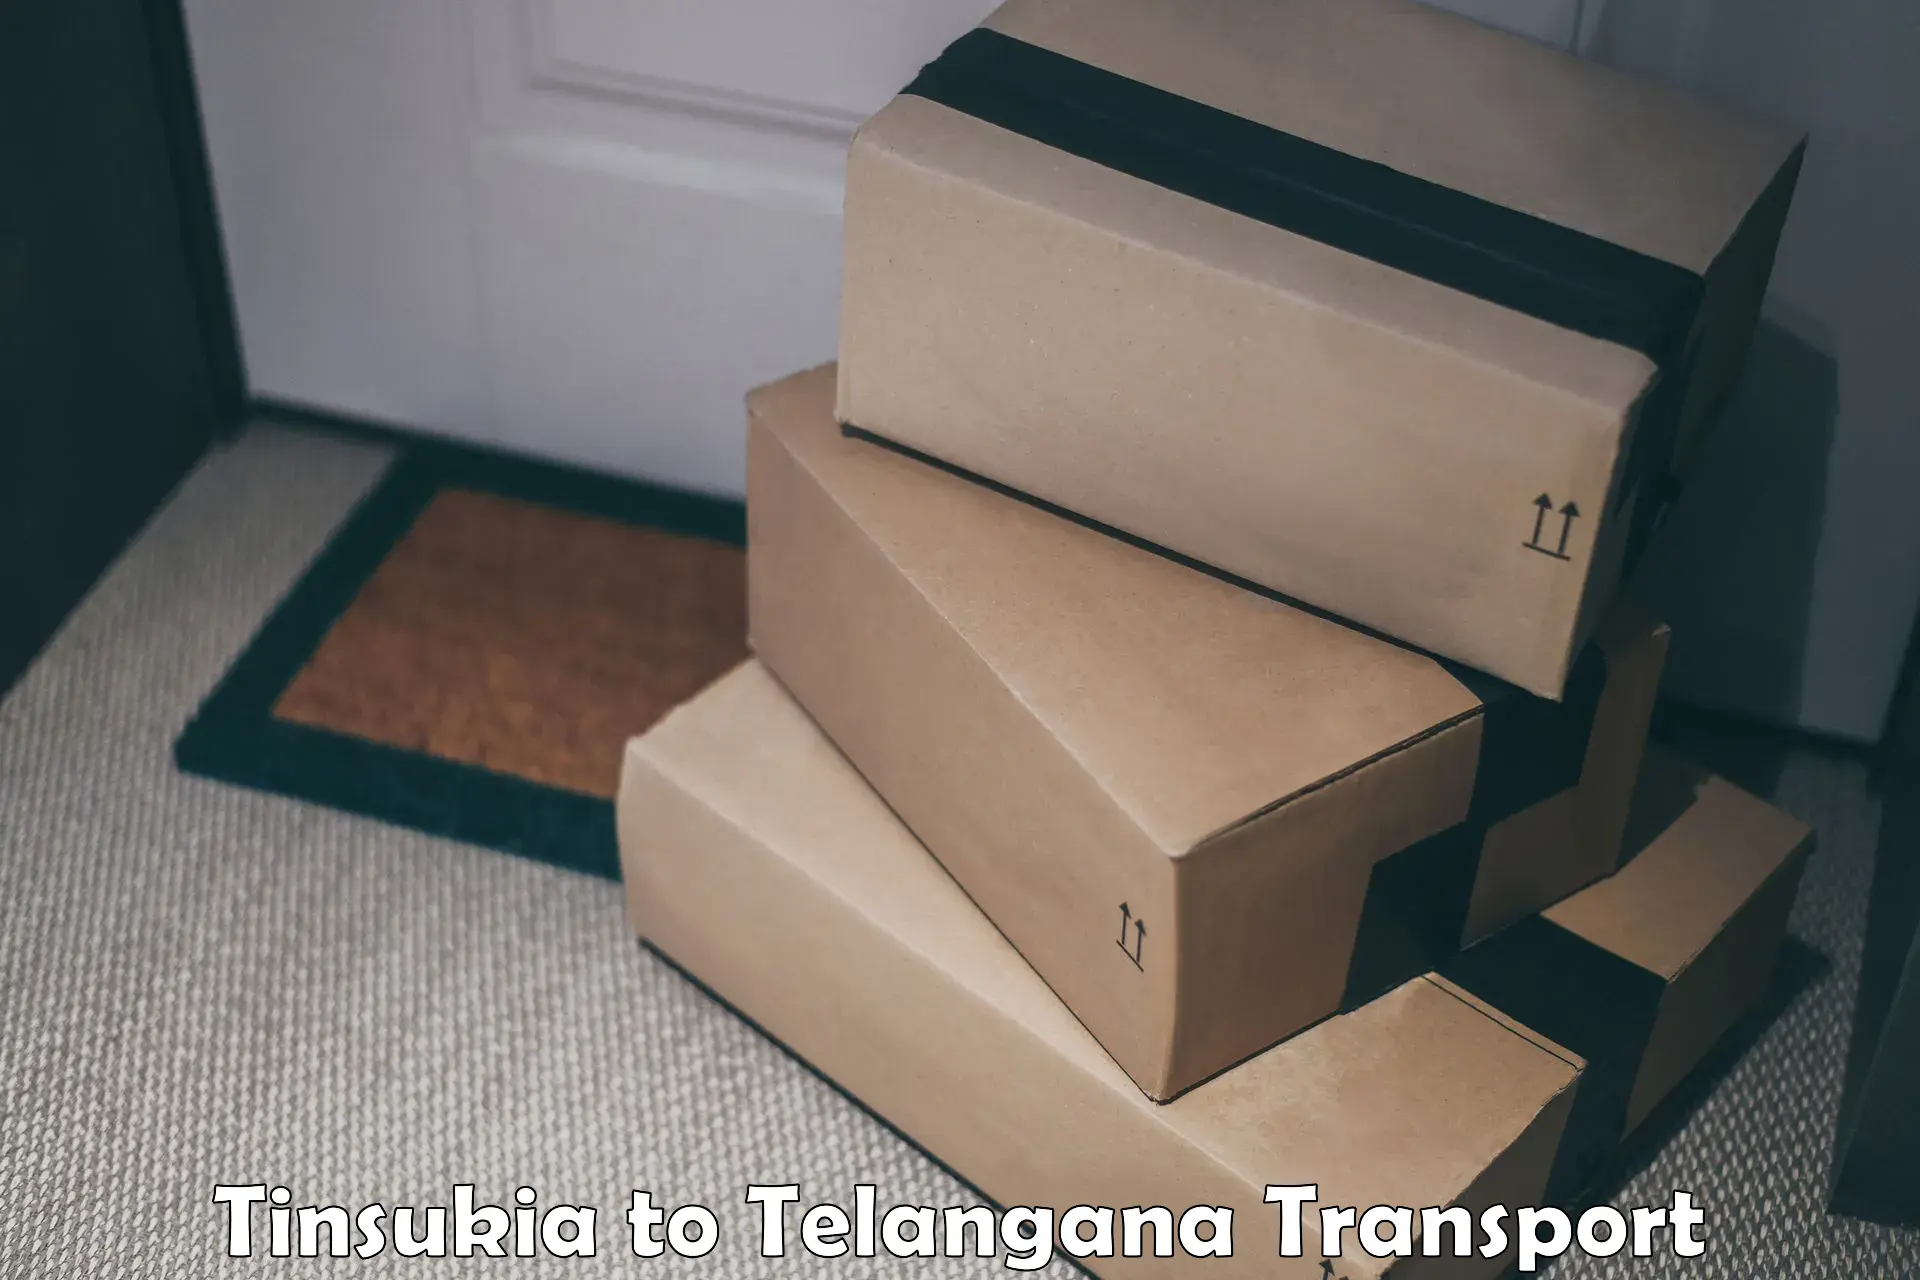 Delivery service Tinsukia to Shamshabad